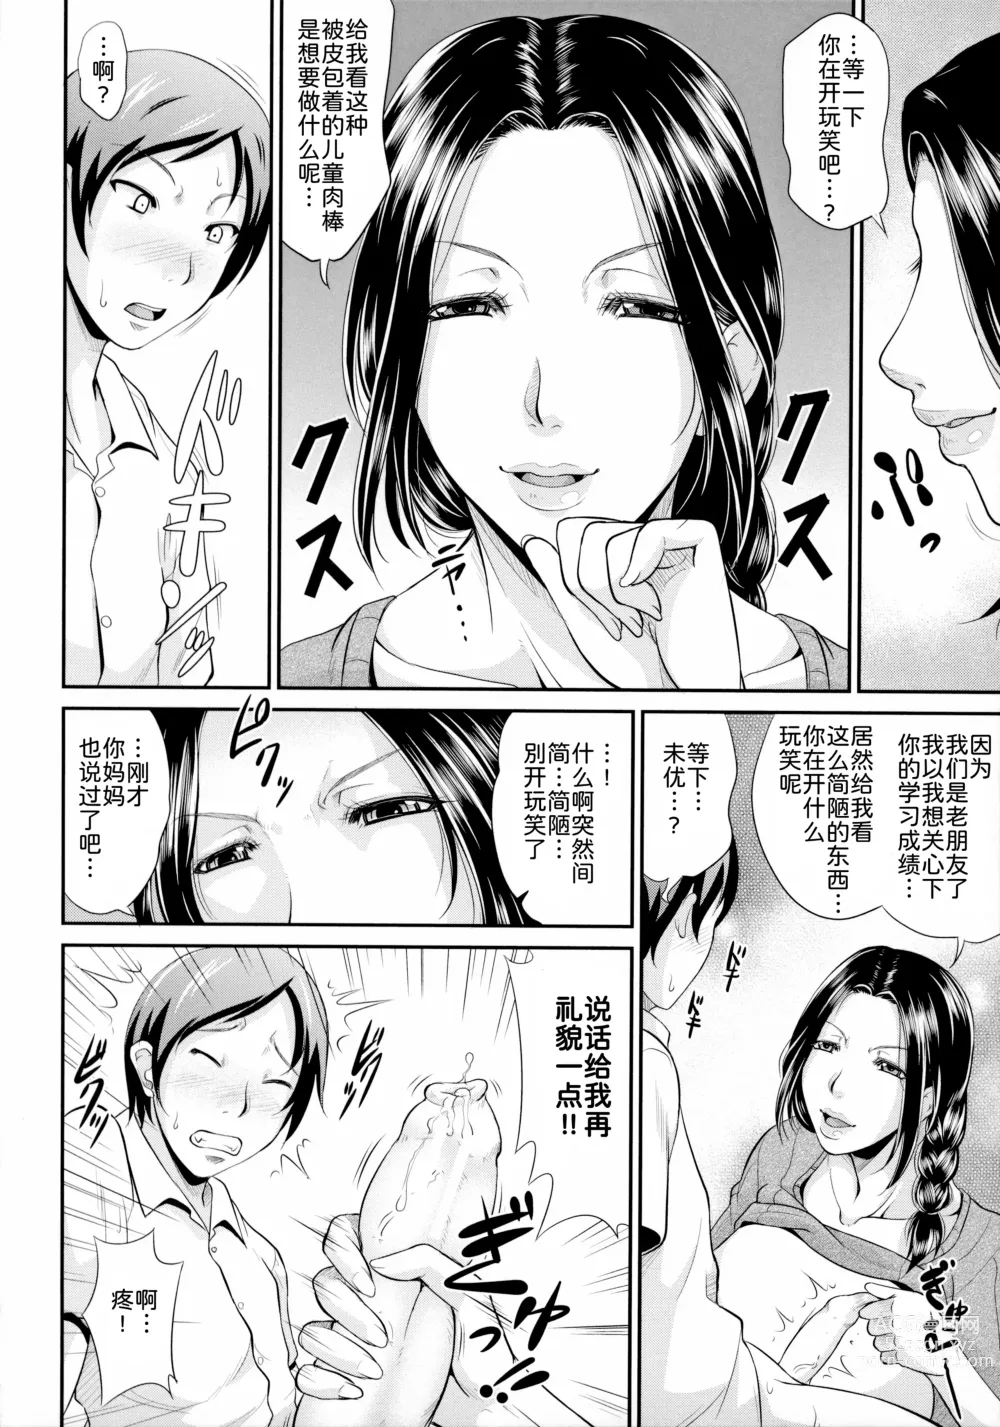 Page 175 of manga Uruwashi no Wife